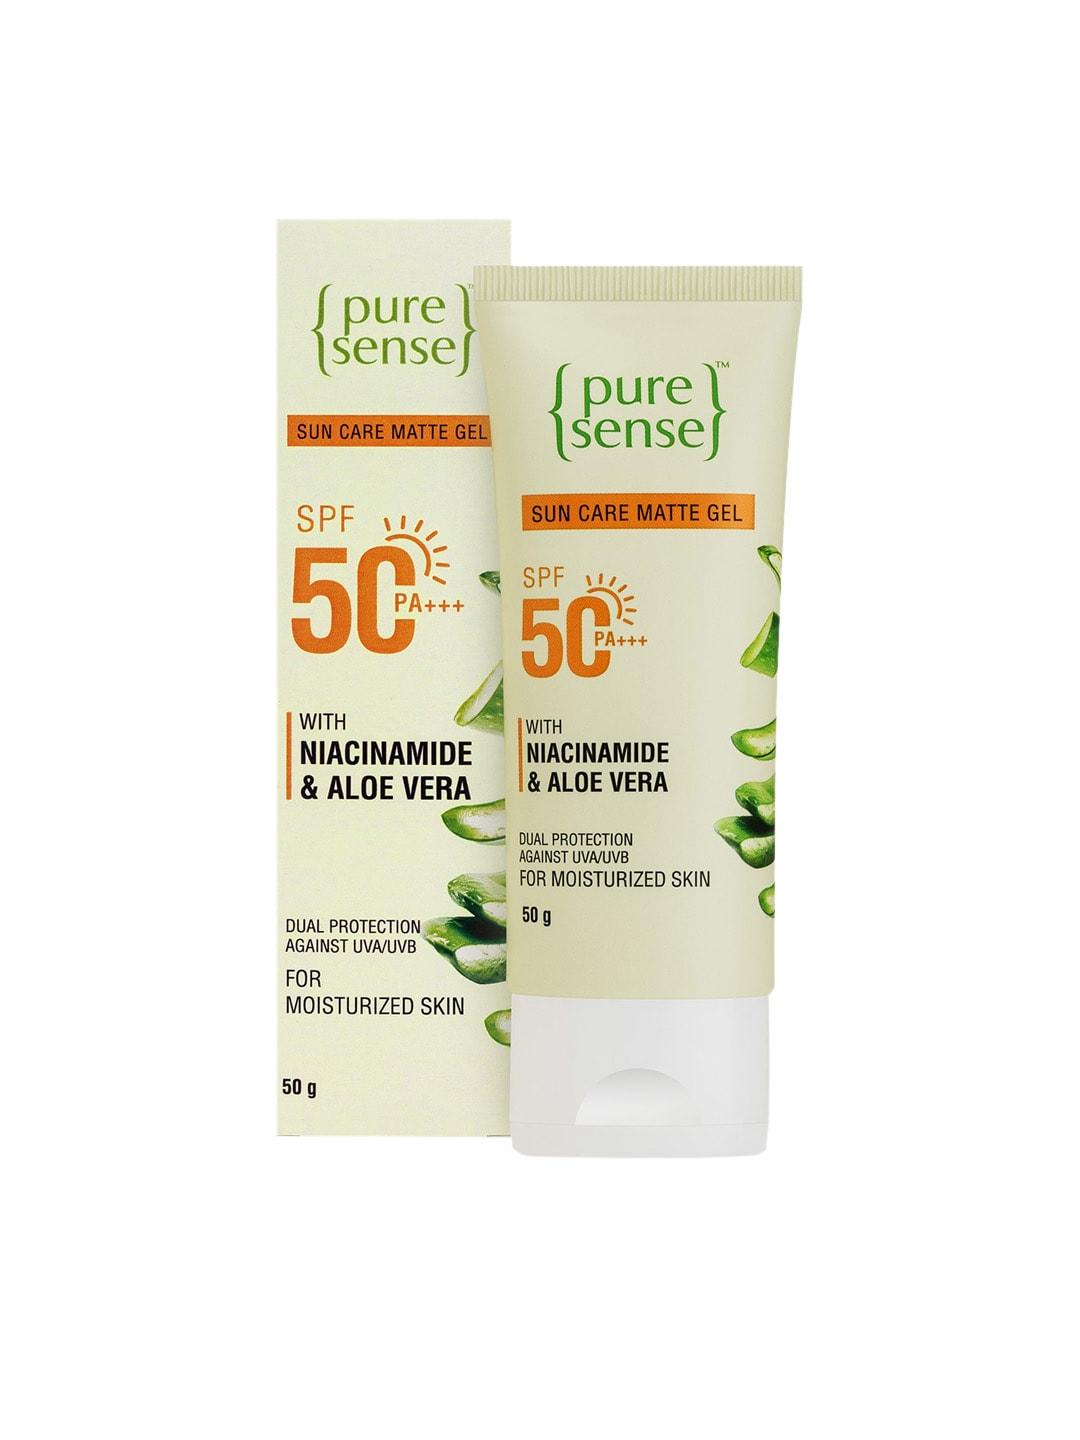 Pure Sense SPF 50 PA+++ Sun Care Matte Gel with Niacinamide & Aloe Vera - 50 g